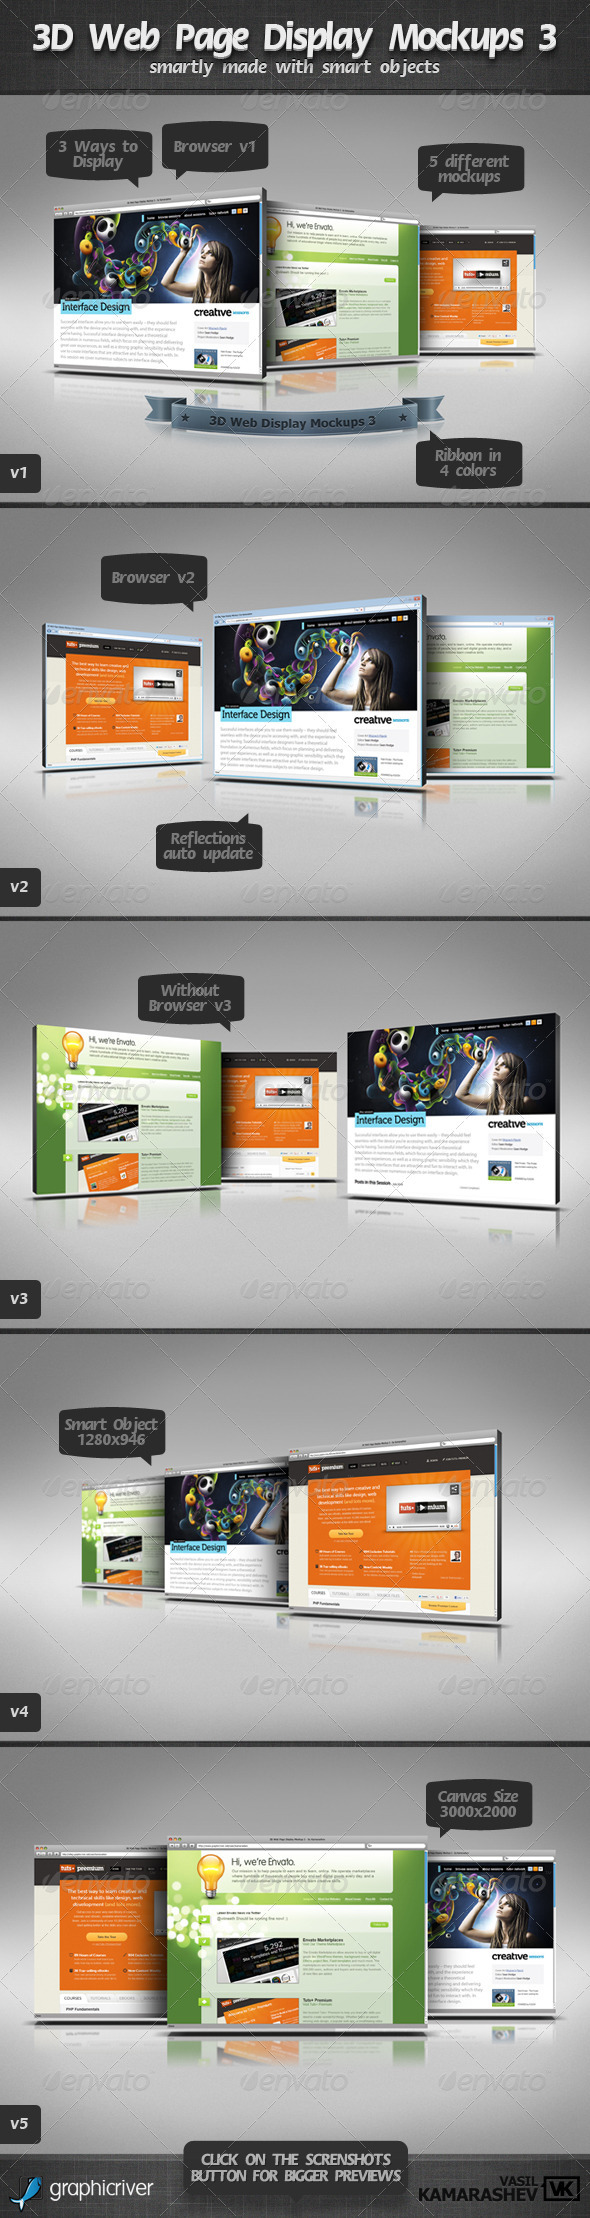 Download 3d Web Page Display Mockups 3 By Kamarashev Graphicriver